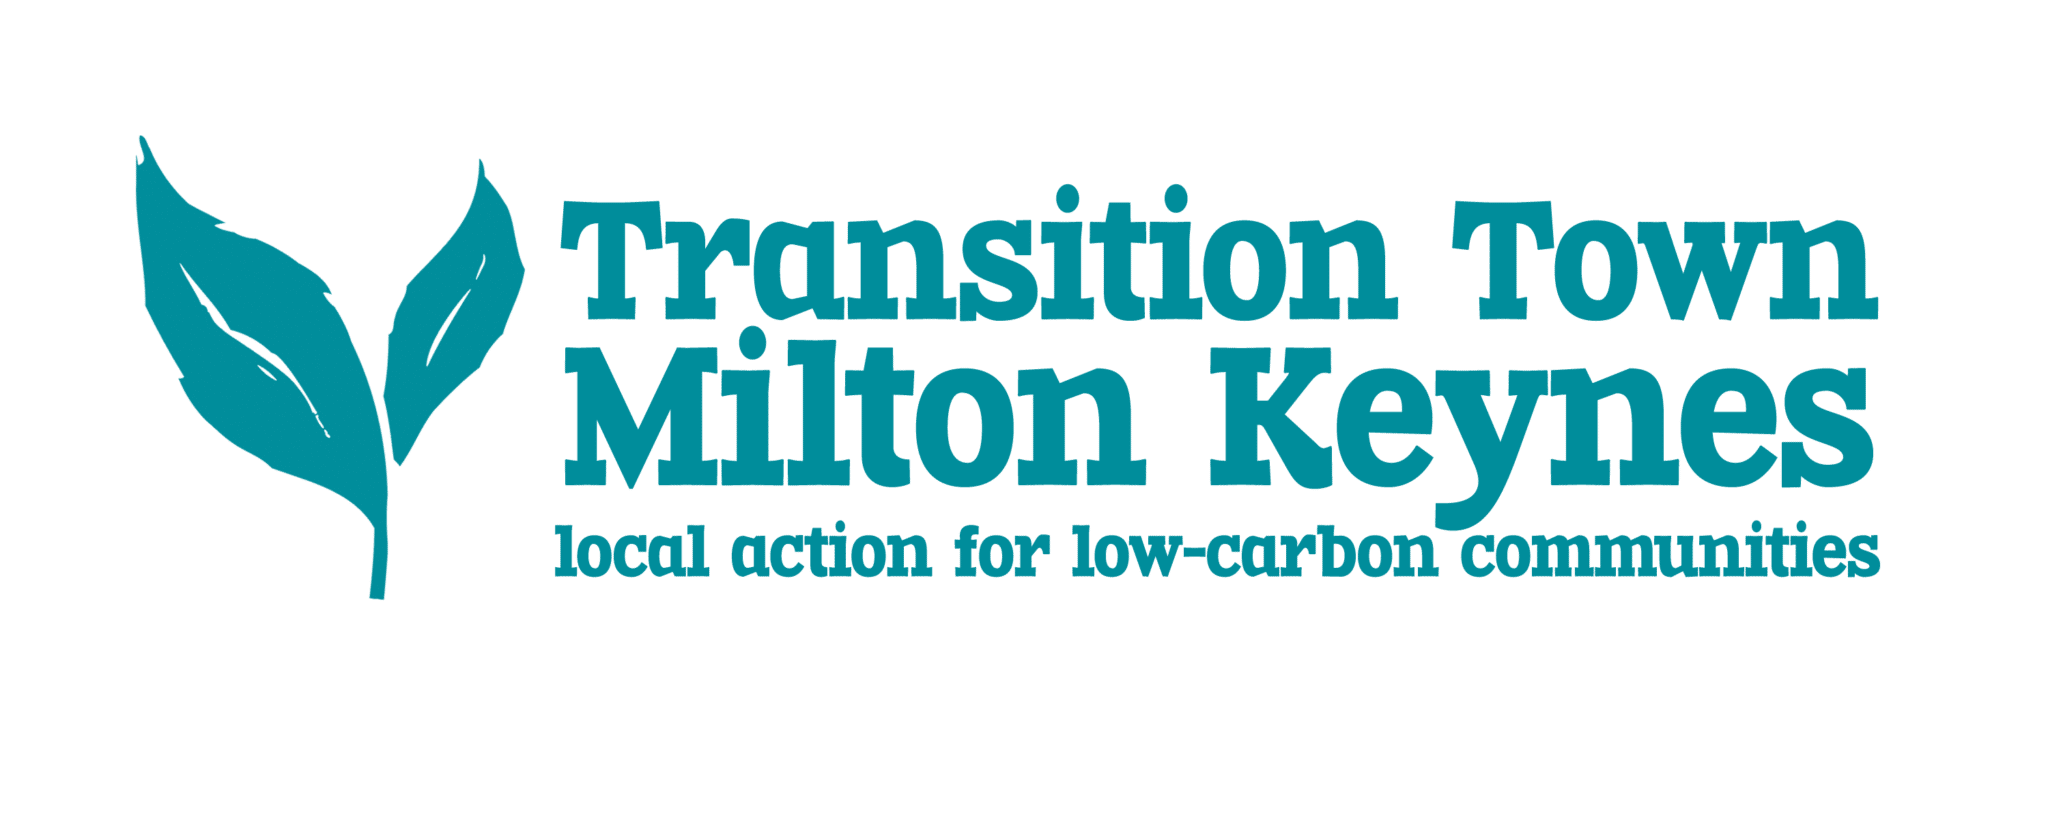 Transition Town Milton Keynes